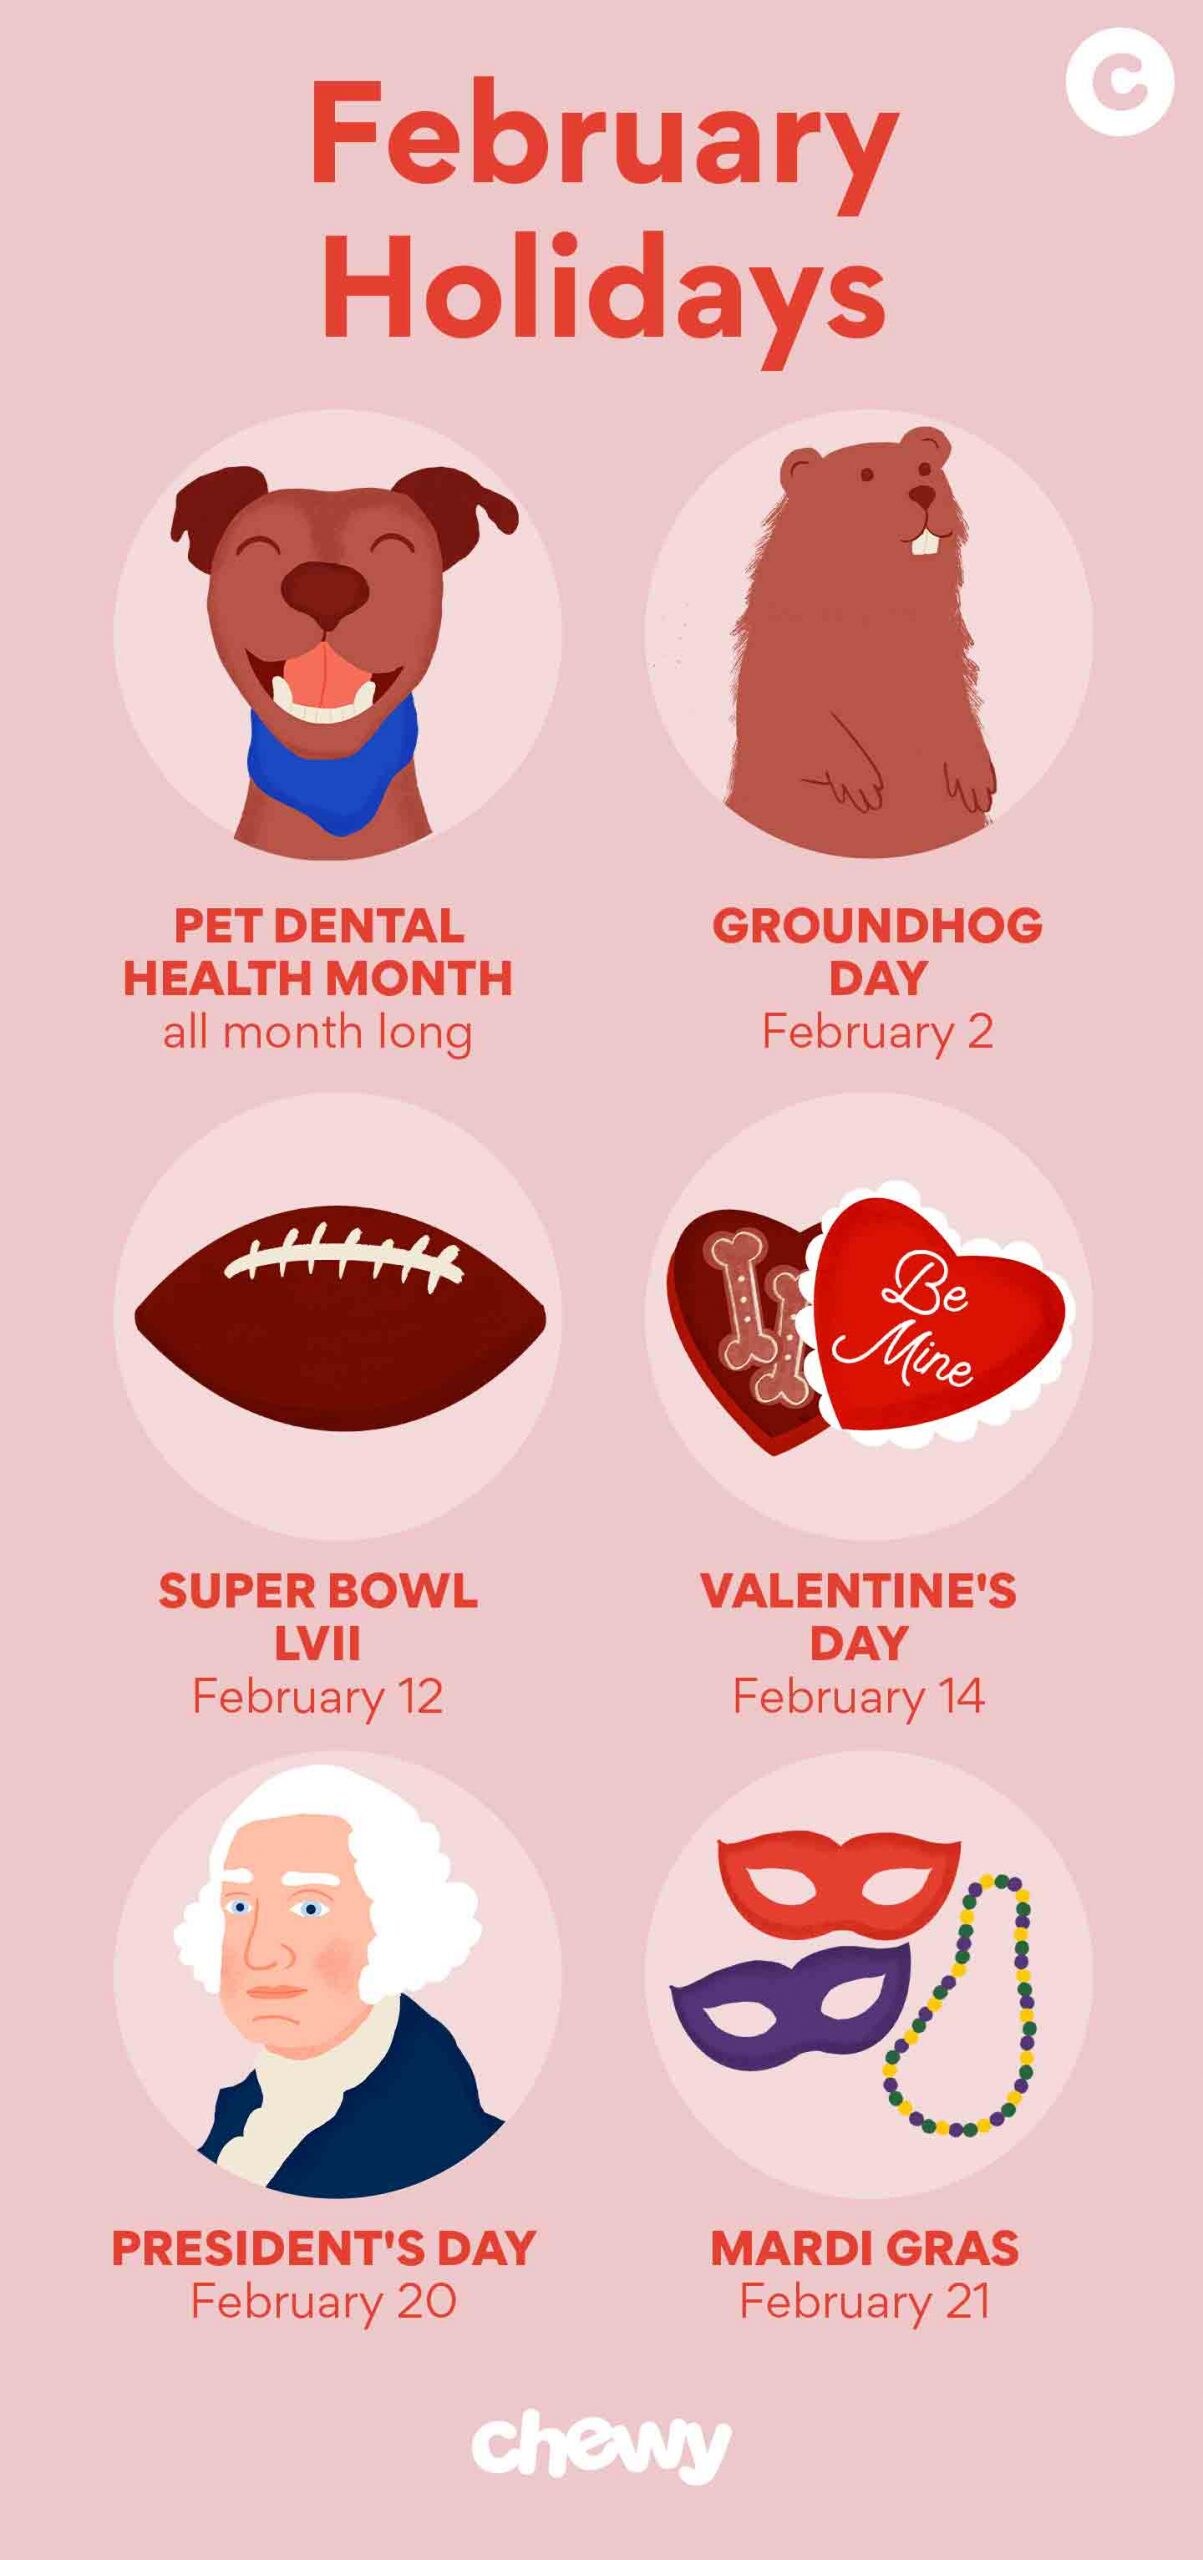 February holidays infographic